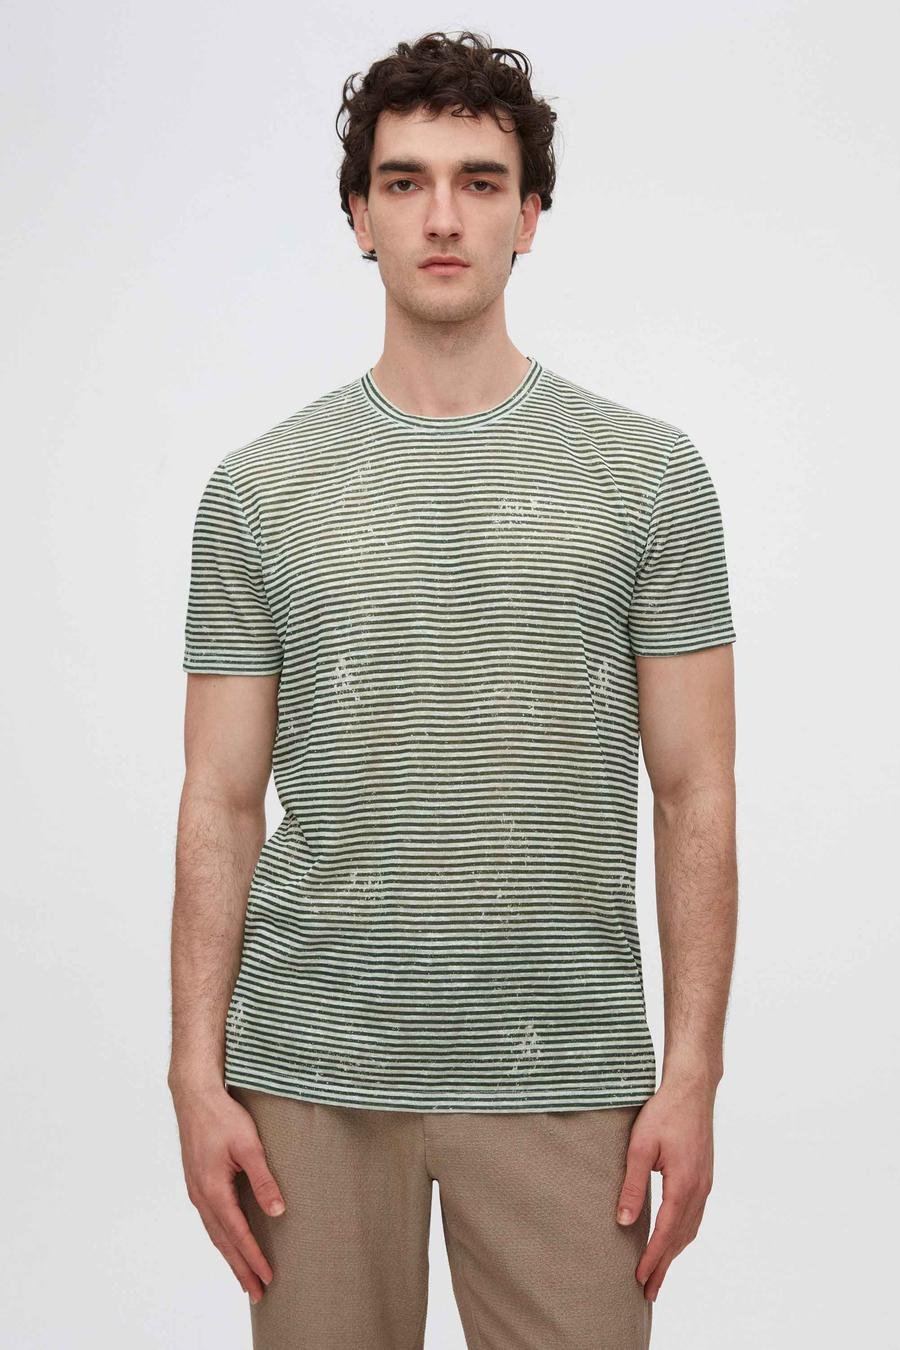 Twn Slim Fit Yeşil Çizgi Baskılı T-Shirt - 8683925125274 | D'S Damat